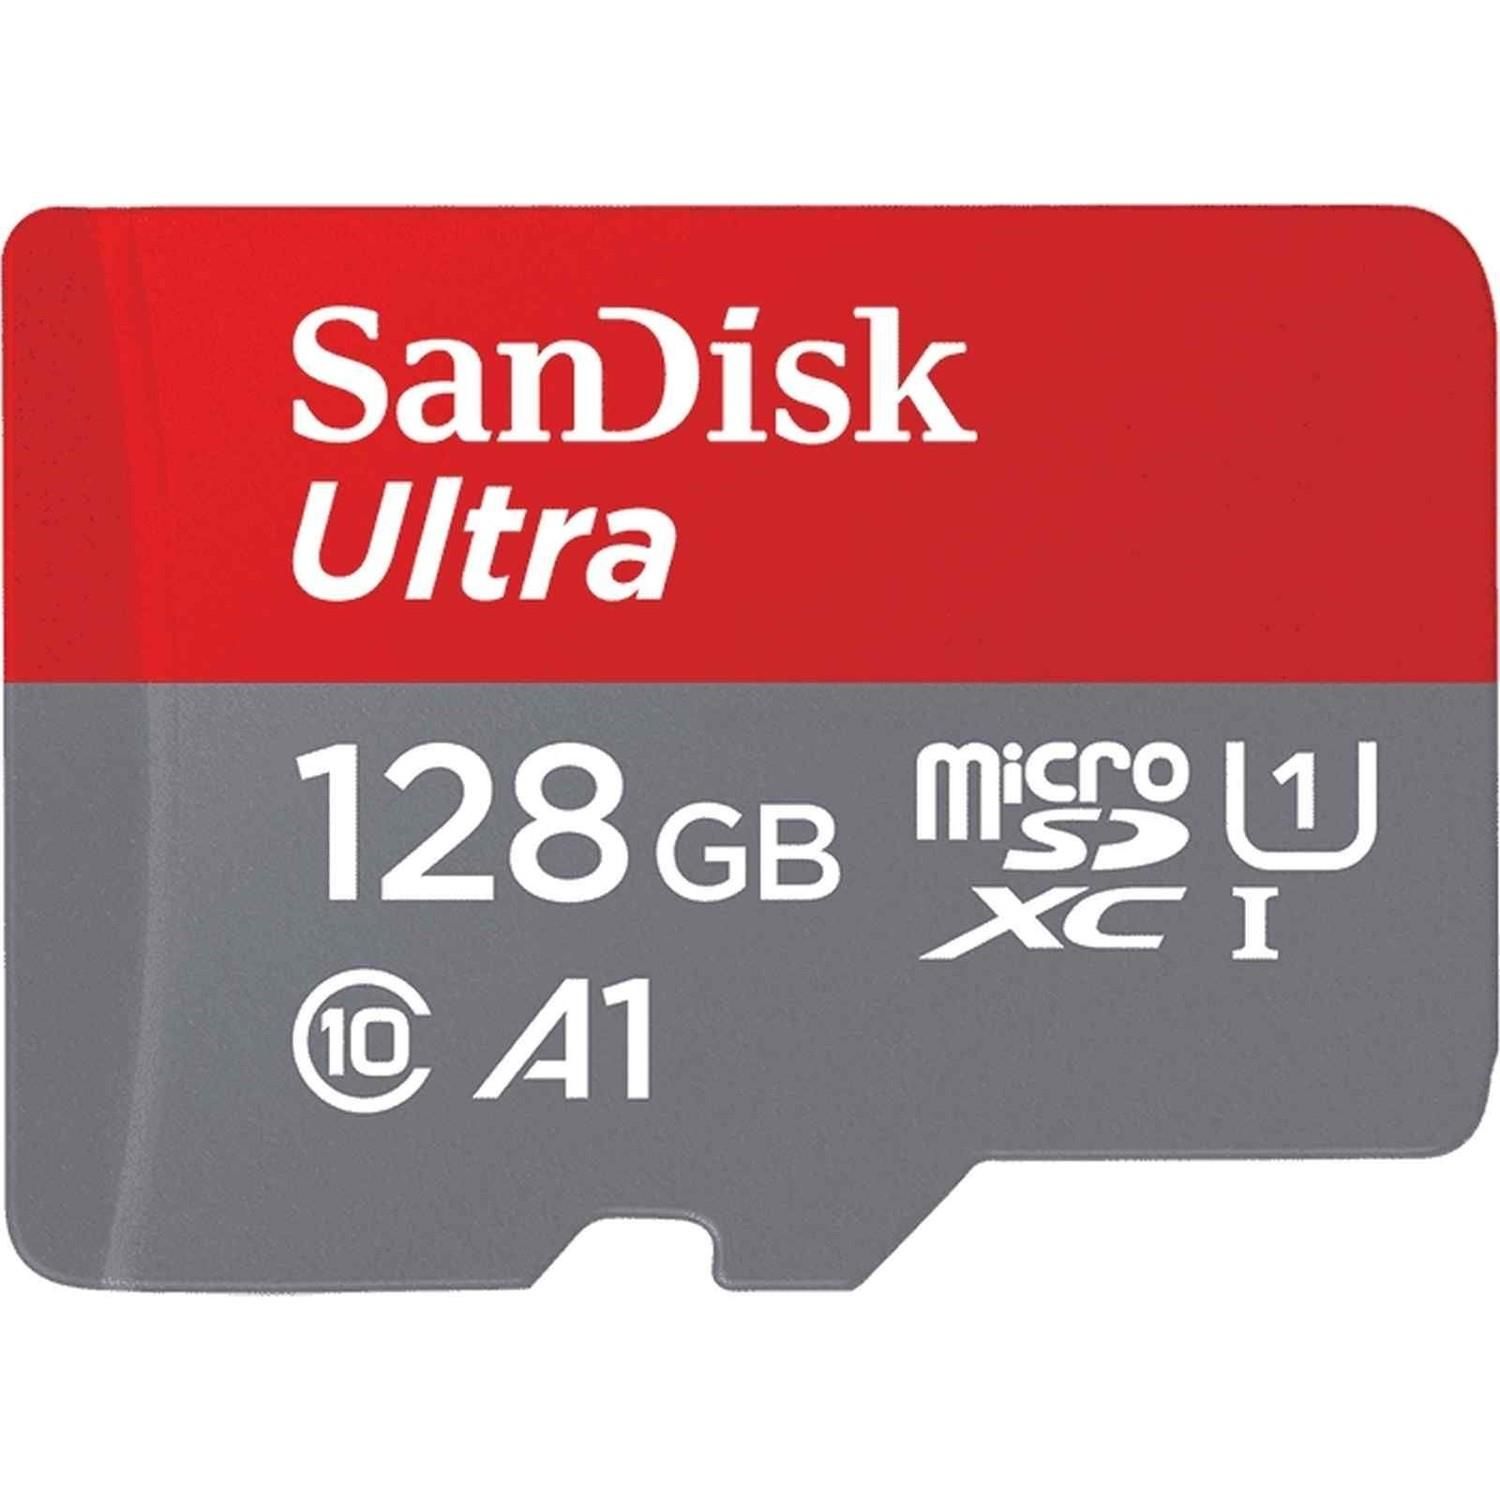 SANDİSK 128 GB MİCRO SD KART